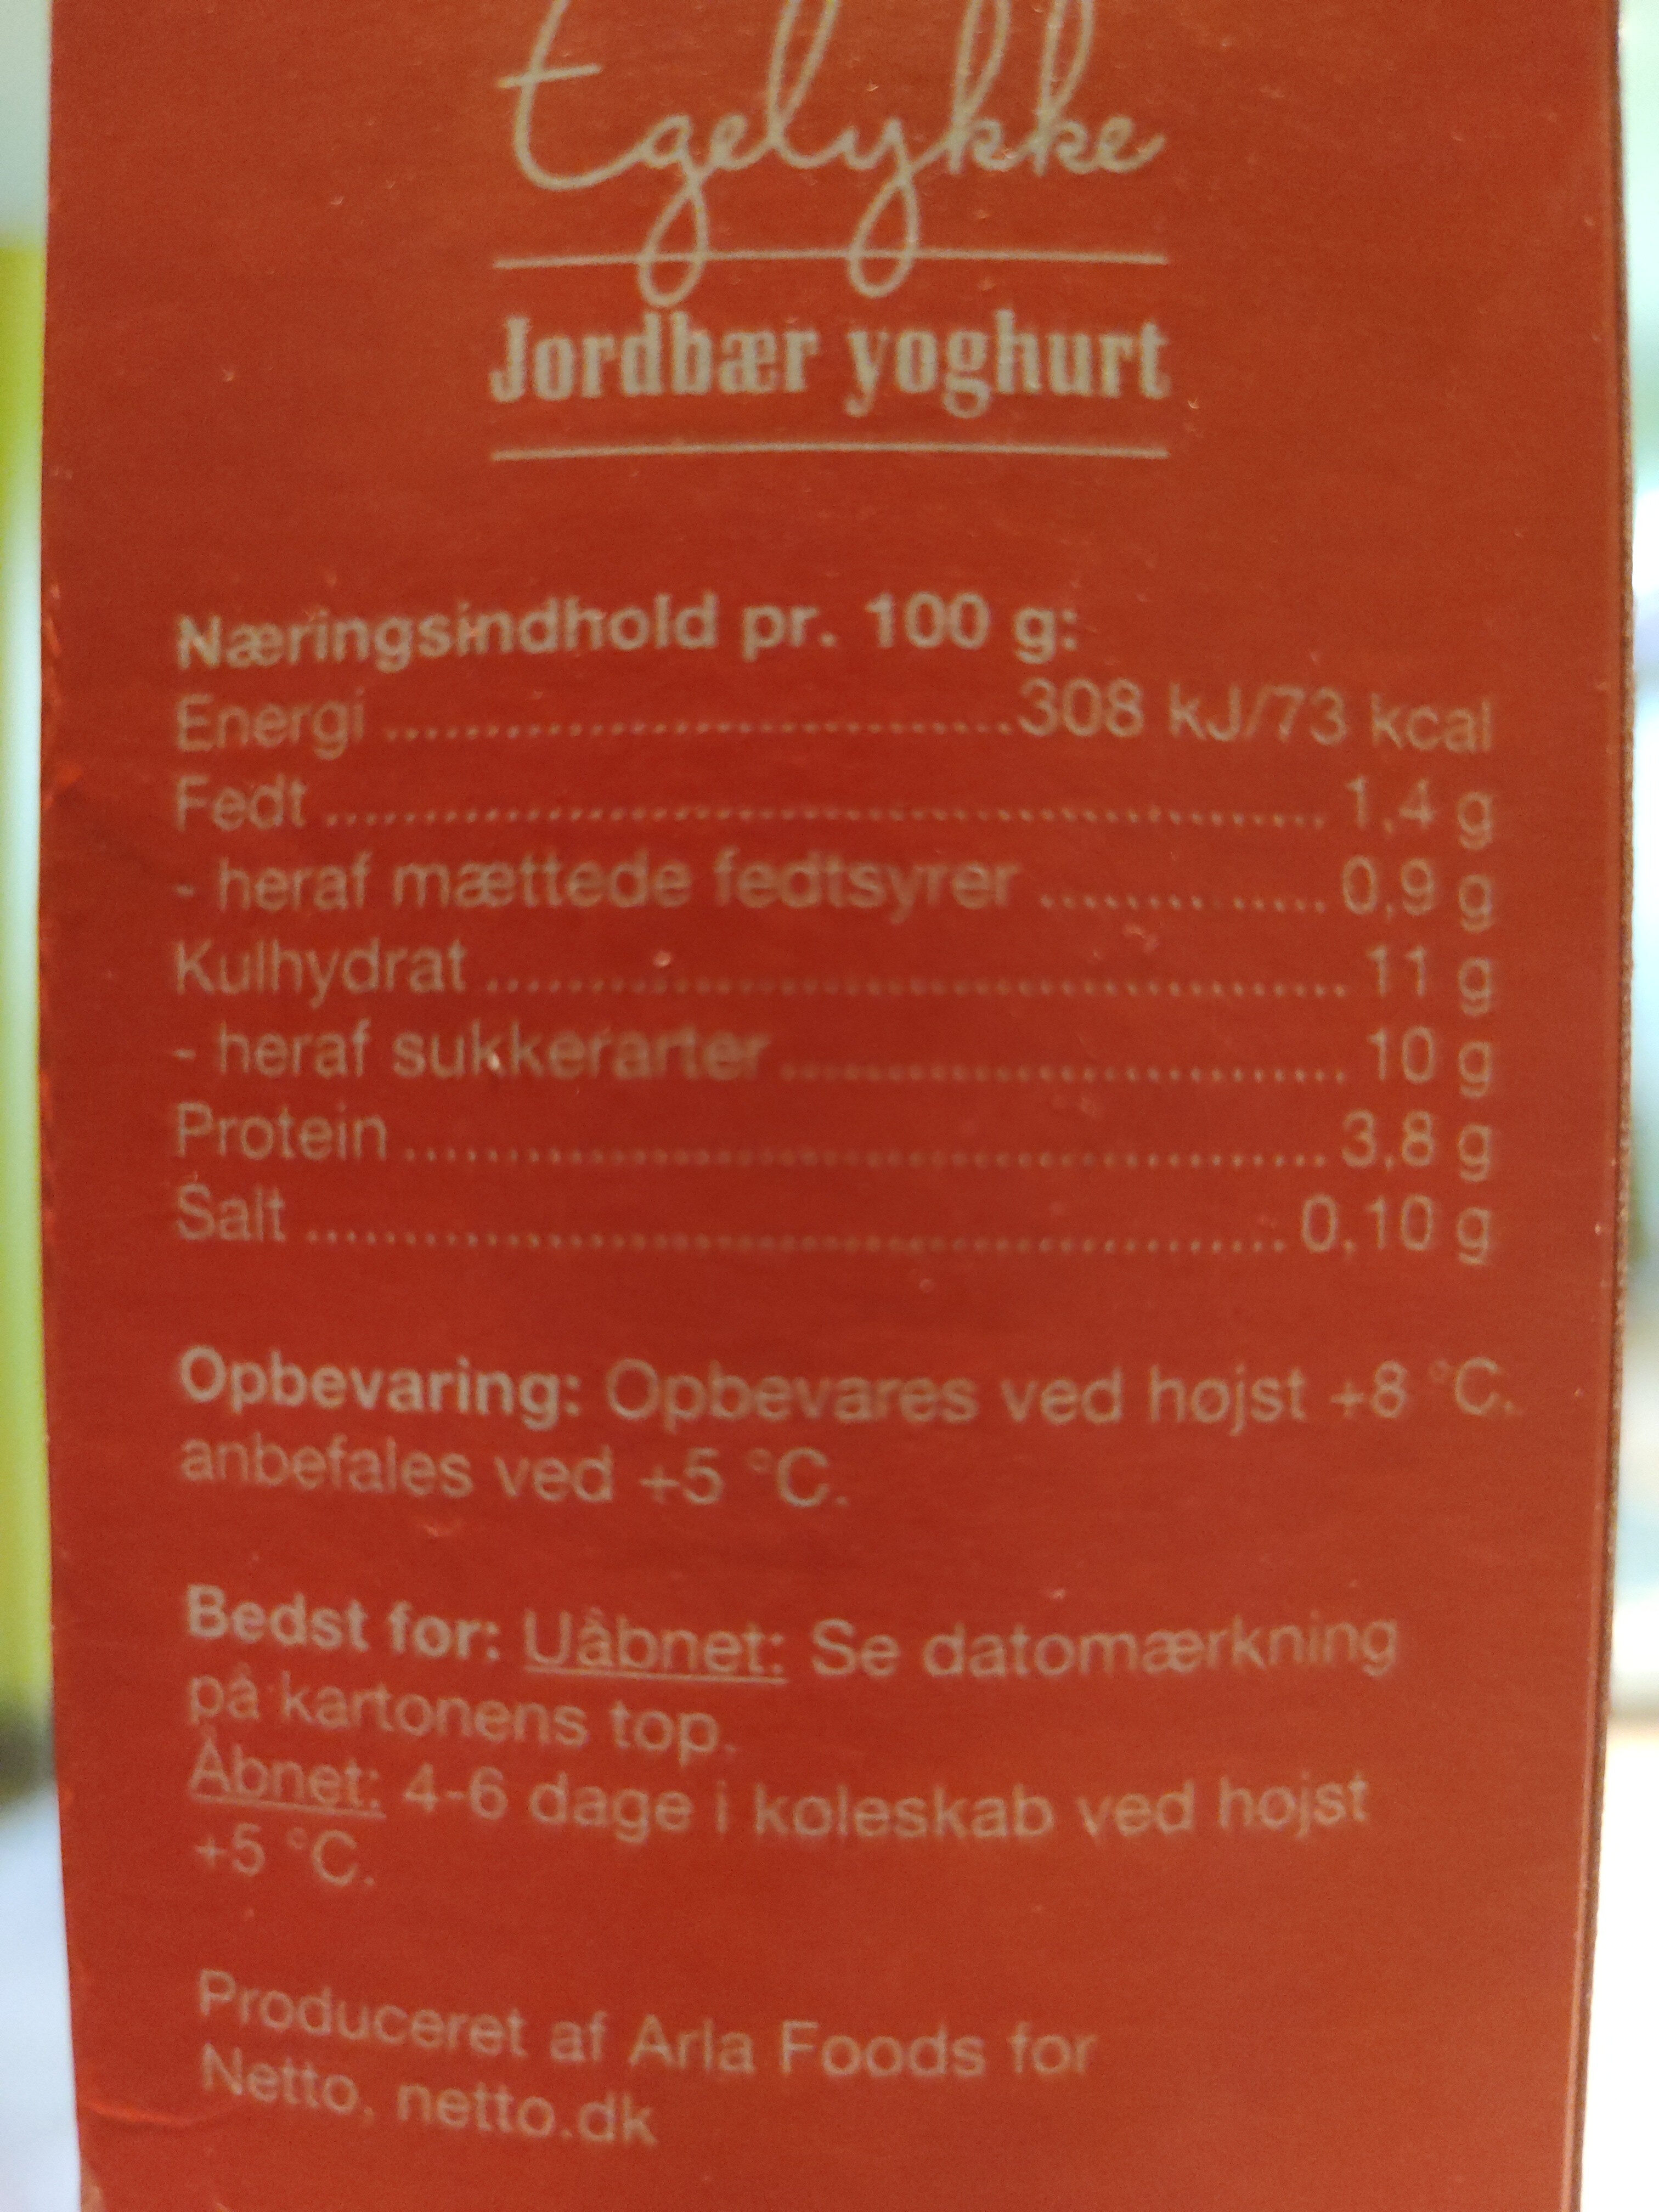 Egelykke Jordbær yogurt 1,4 % fedt - Ernæringsfakta